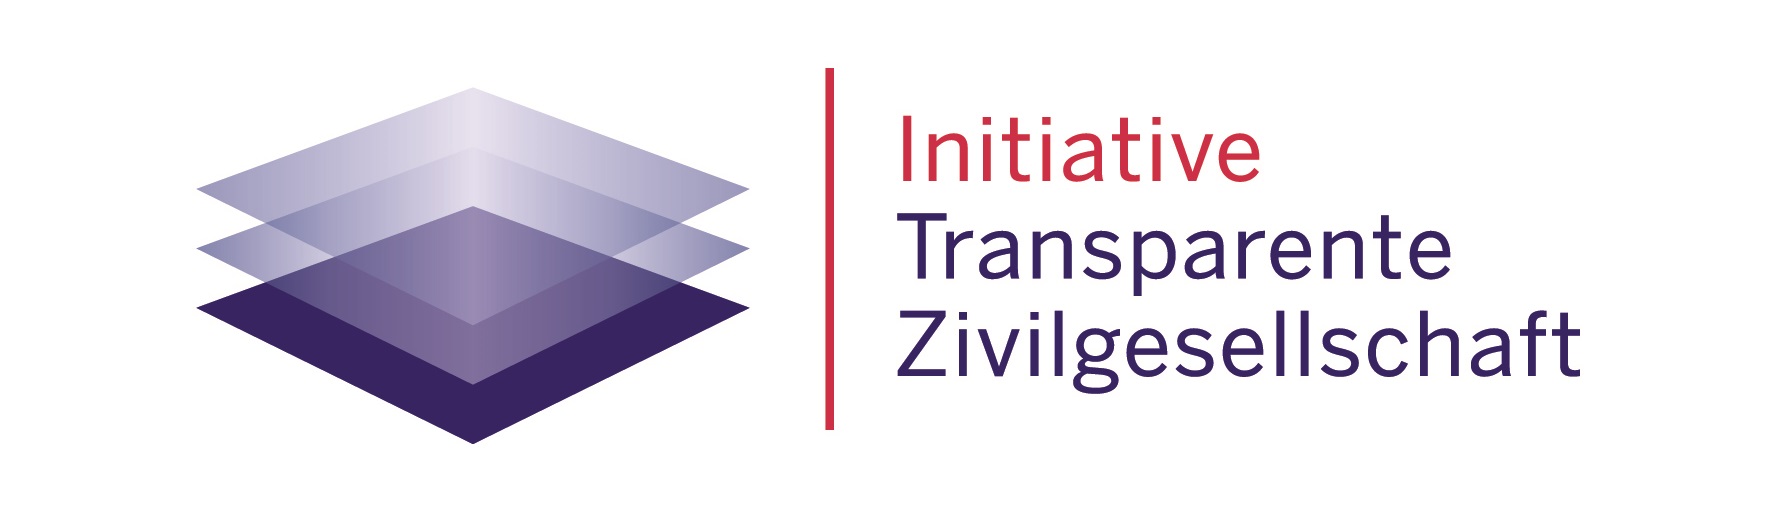 Initiative Transparente Zivilgesellschaft (ITZ)